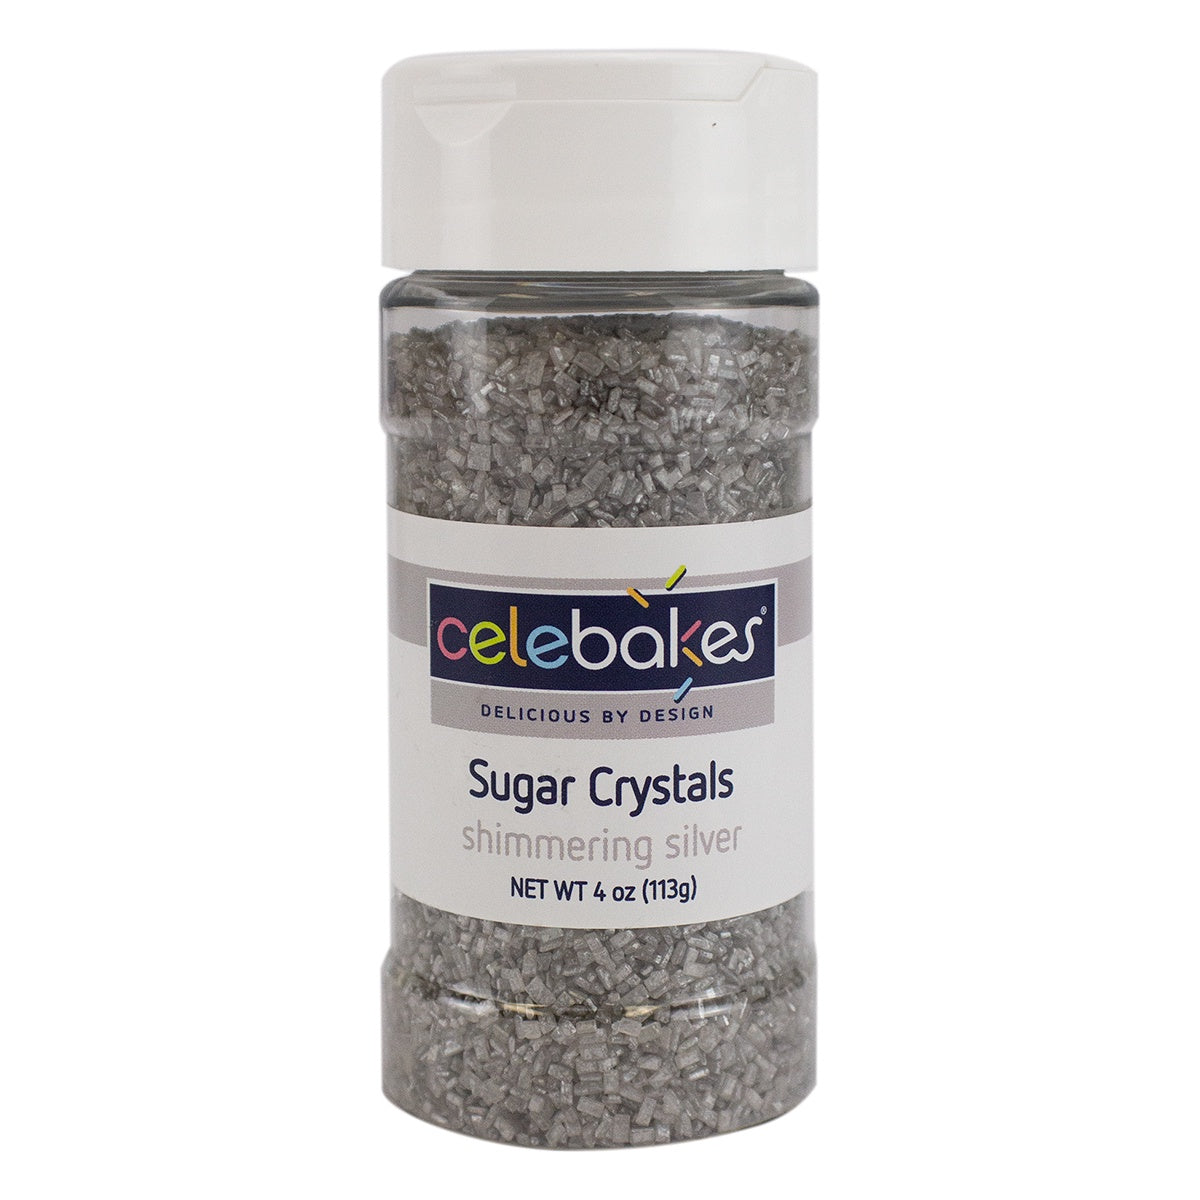 Celebakes Shimmering Silver Sugar Crystals